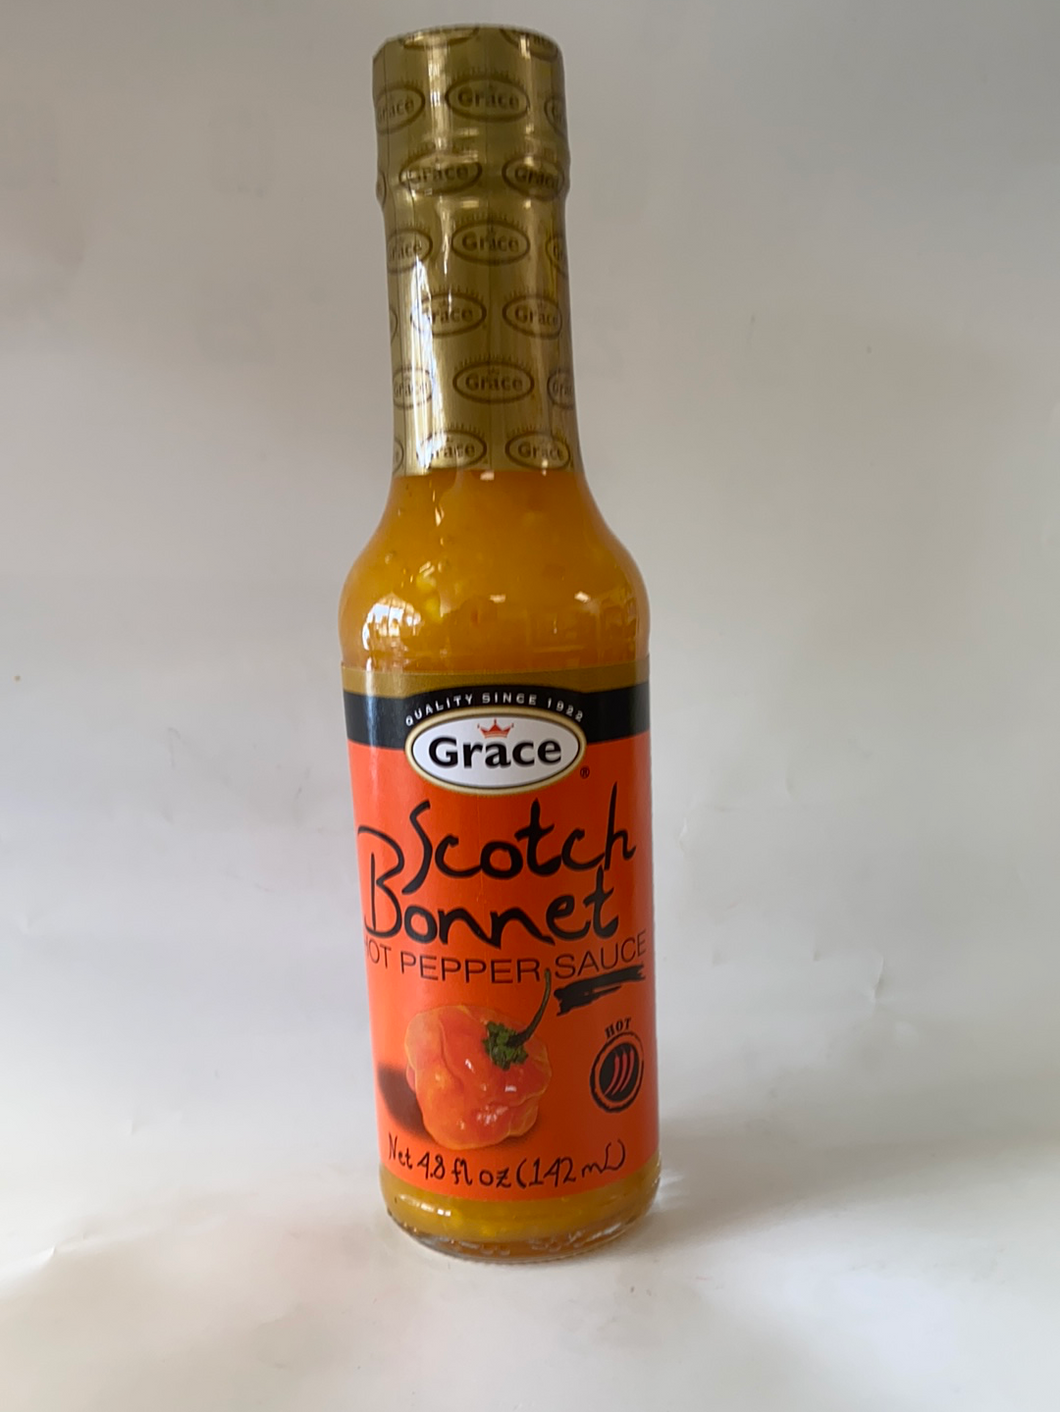 Scotch Bonnet Pepper Sauce, Grace